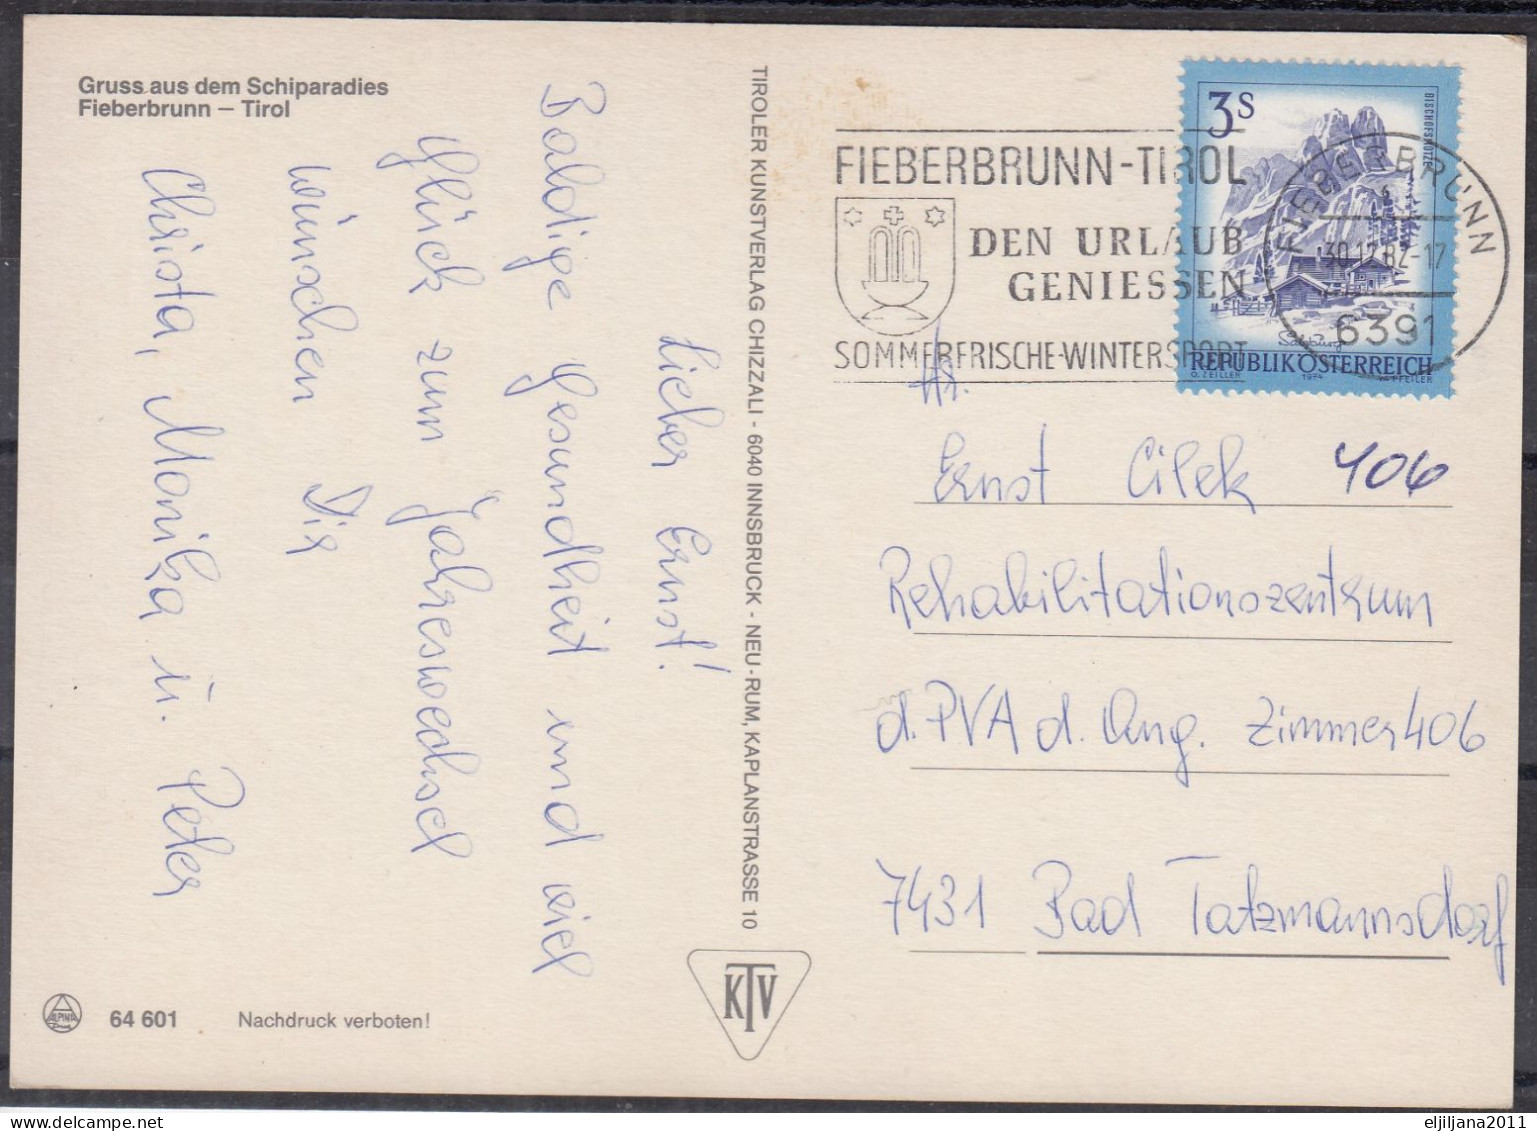 Action !! SALE !! 50 % OFF !! ⁕ Austria / Österreich ⁕ FIEBERBRUNN - TIROL ⁕ Postcard With Stamp - Fieberbrunn